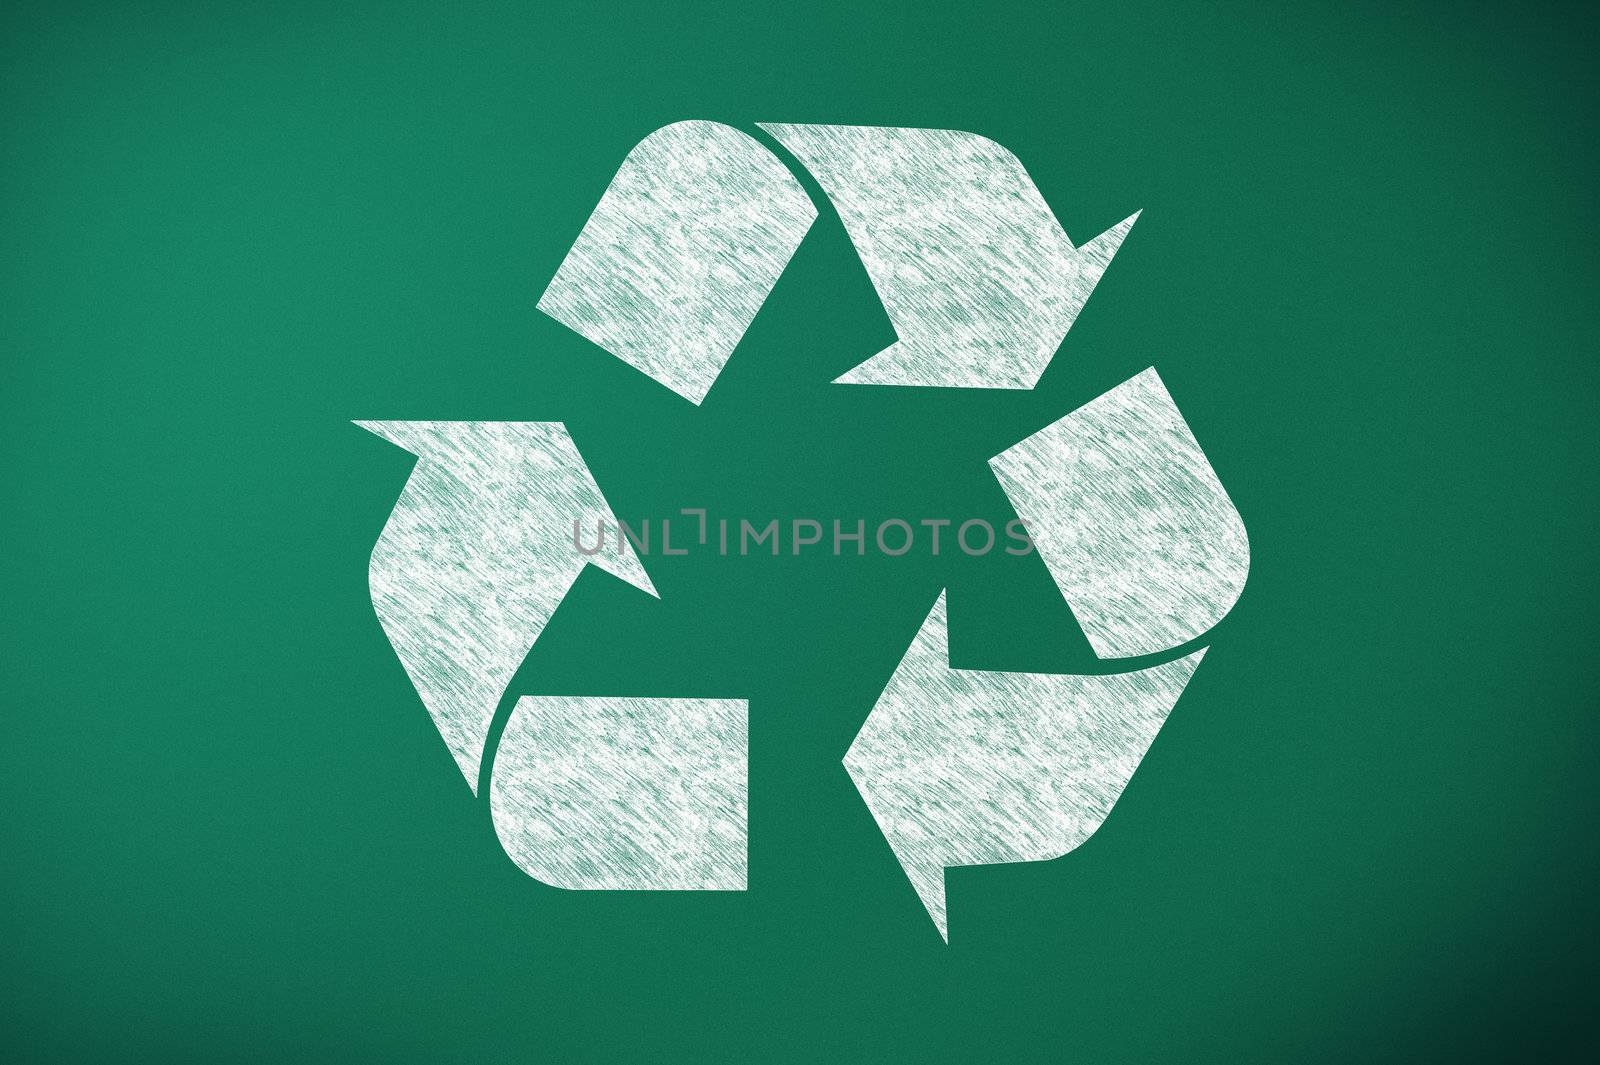 recycling symbol designed on green chalk board